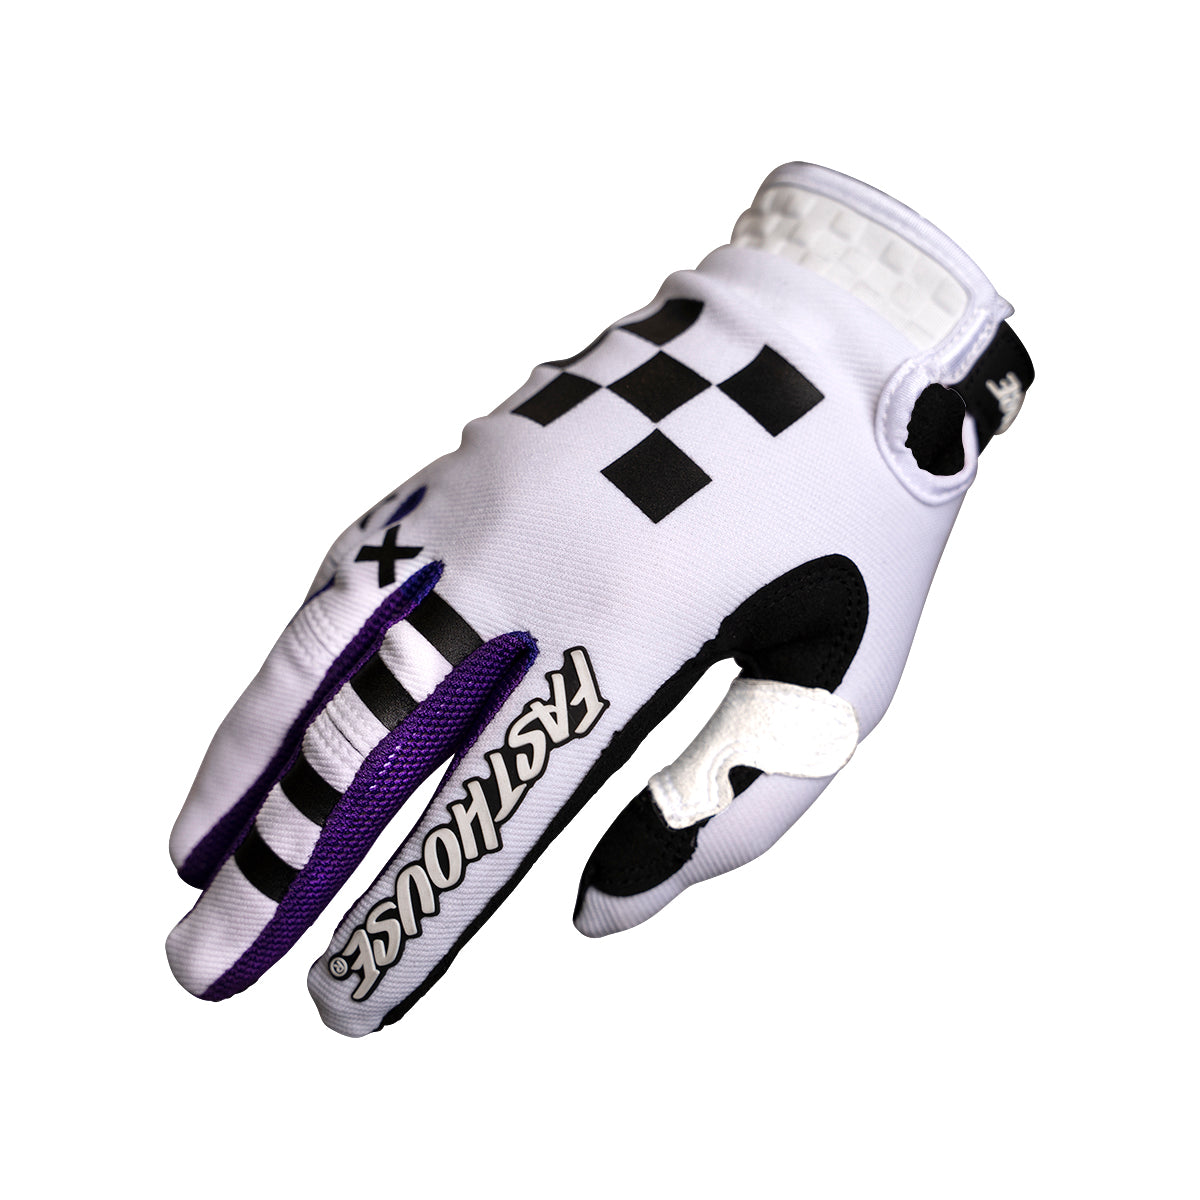 Speed Style Rufio Youth Glove - Black/White